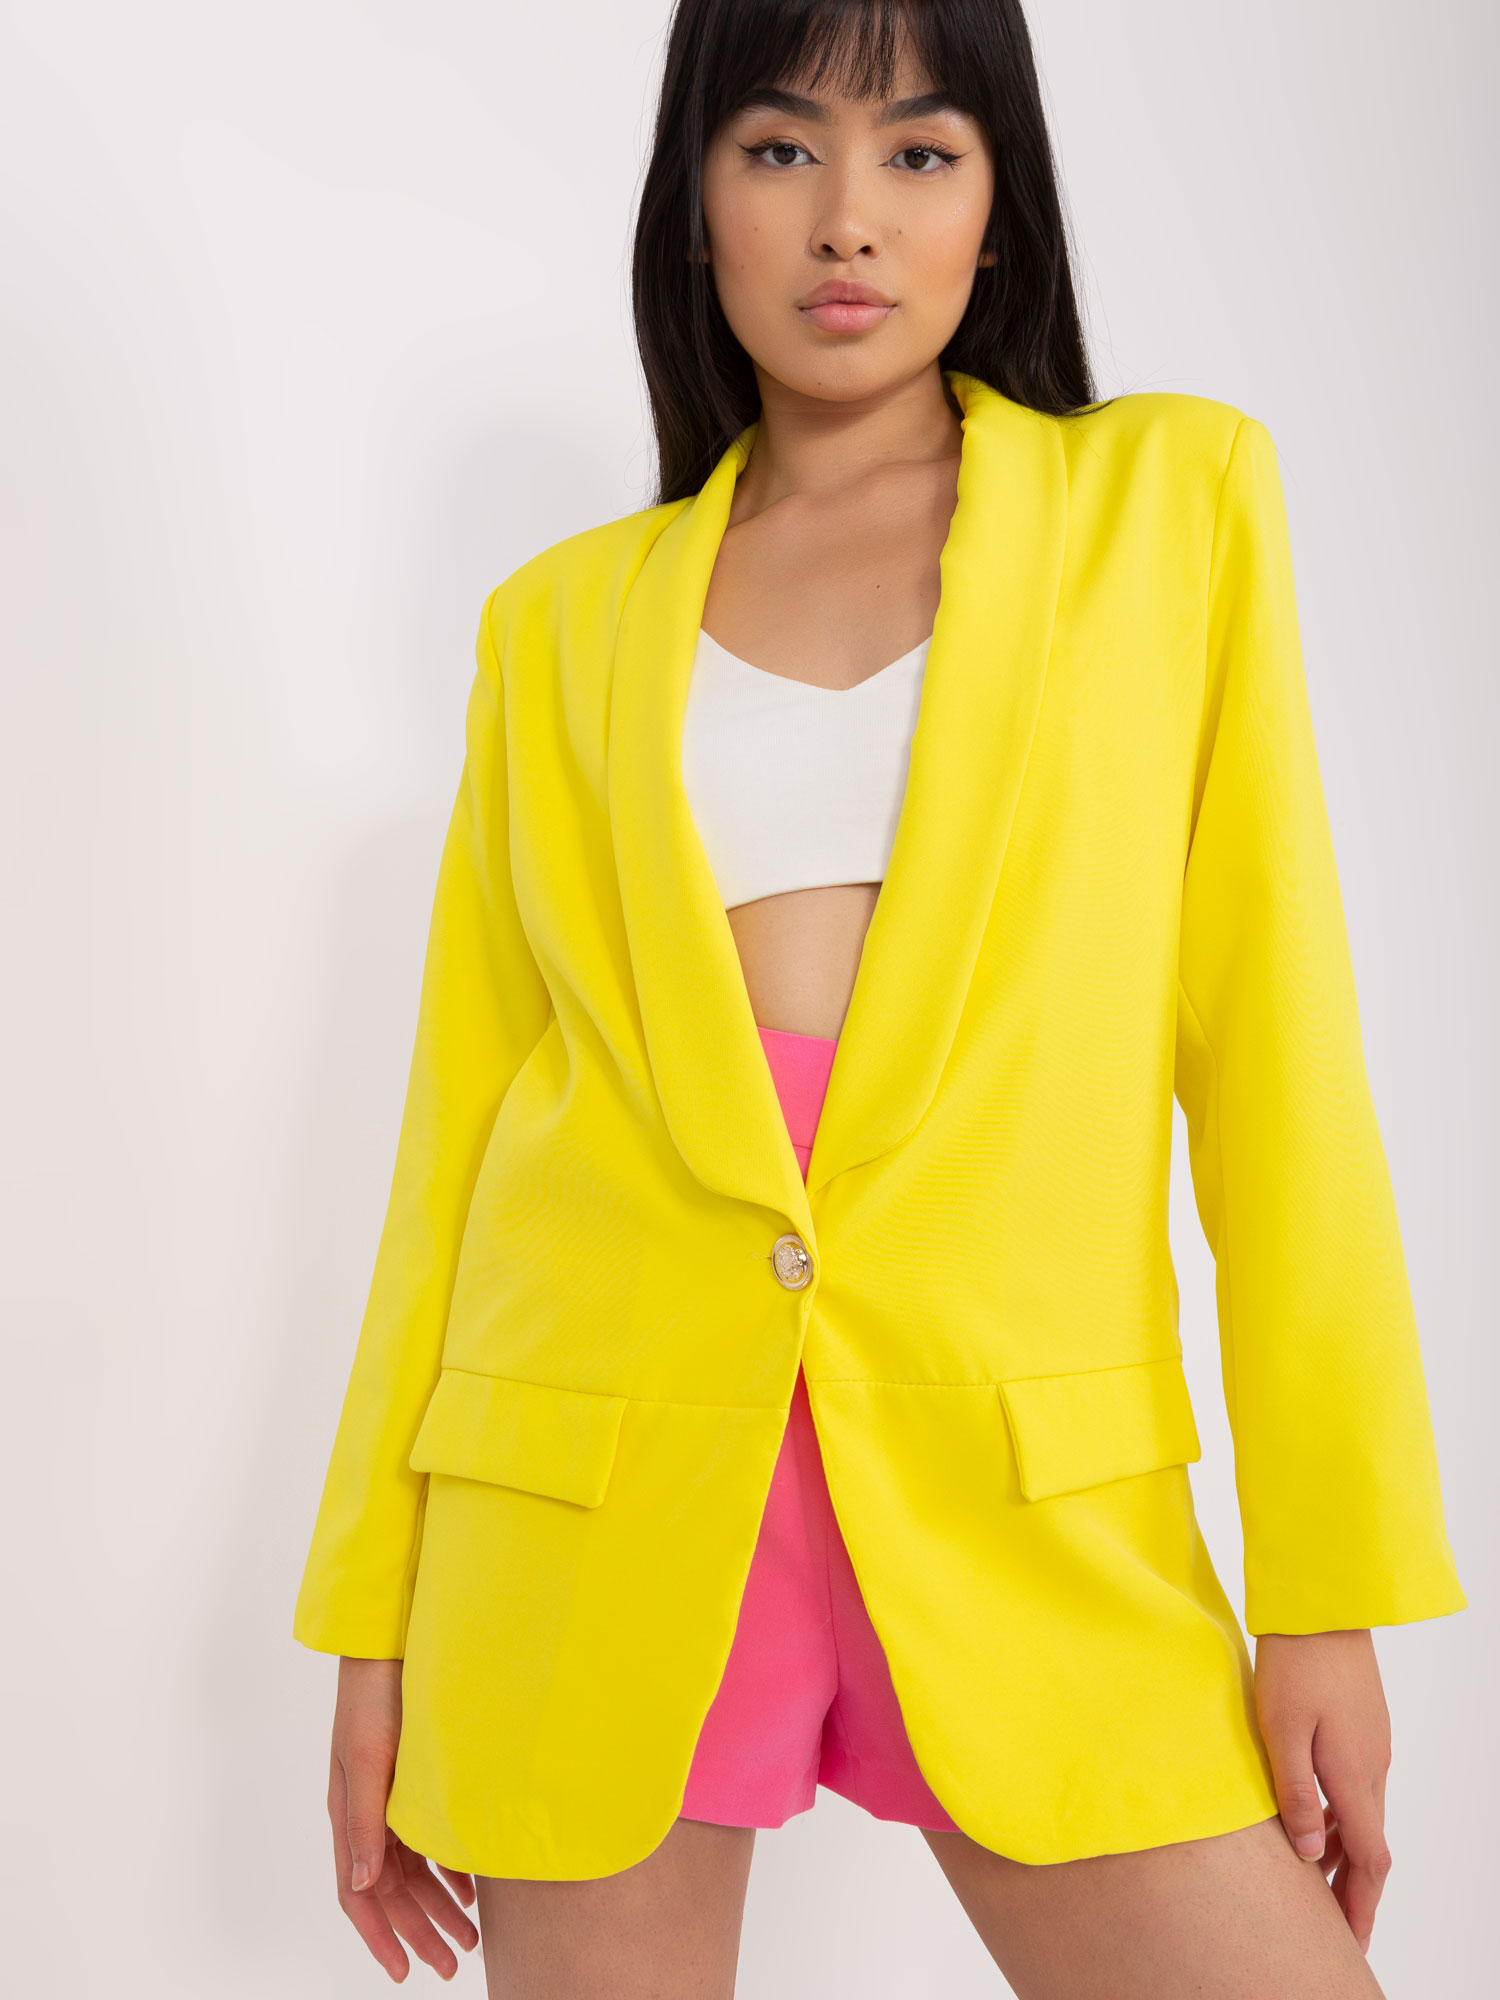 Yellow jacket by Guerrero